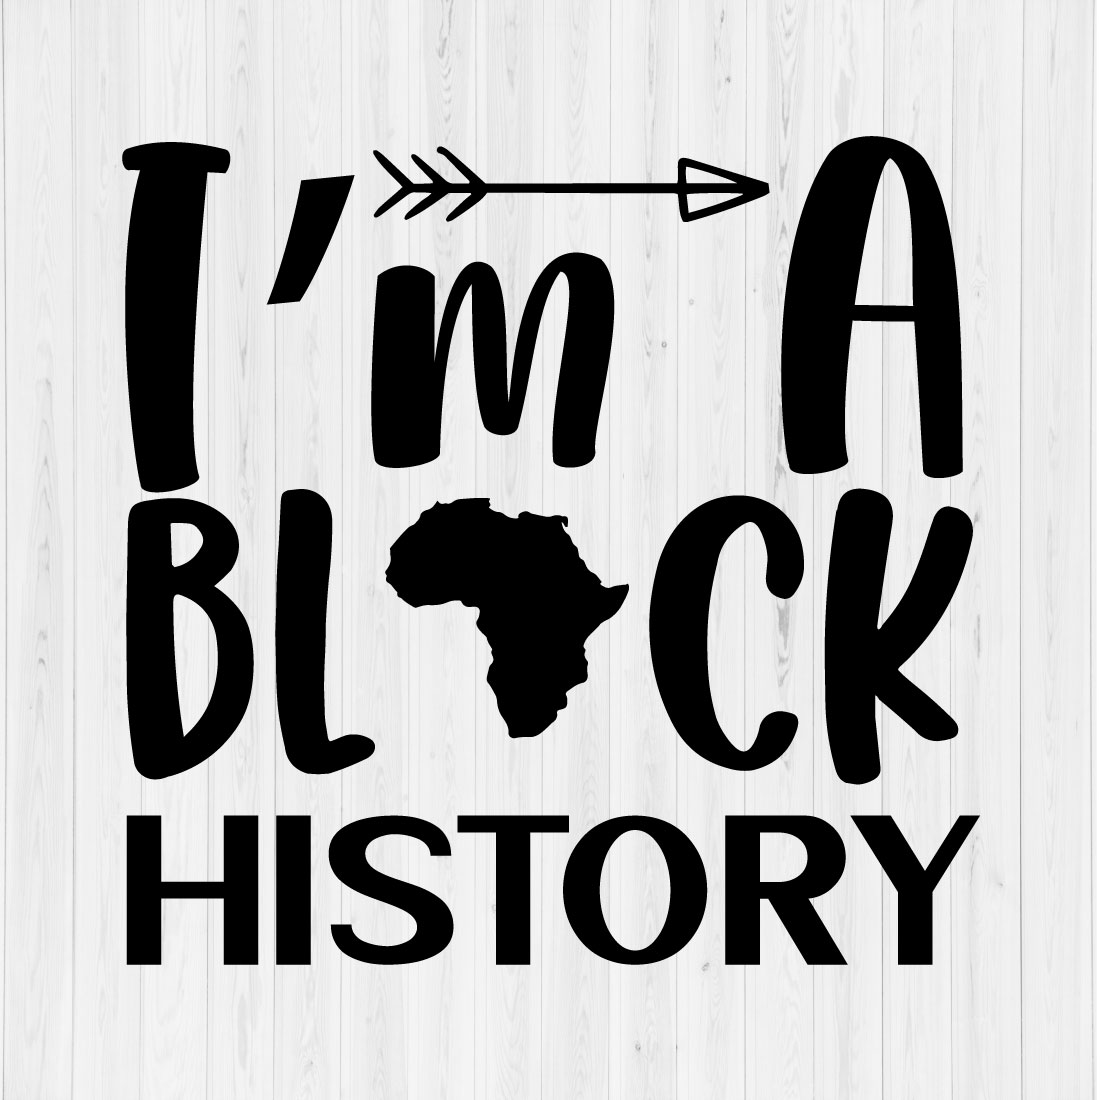 I'm A Black History cover image.